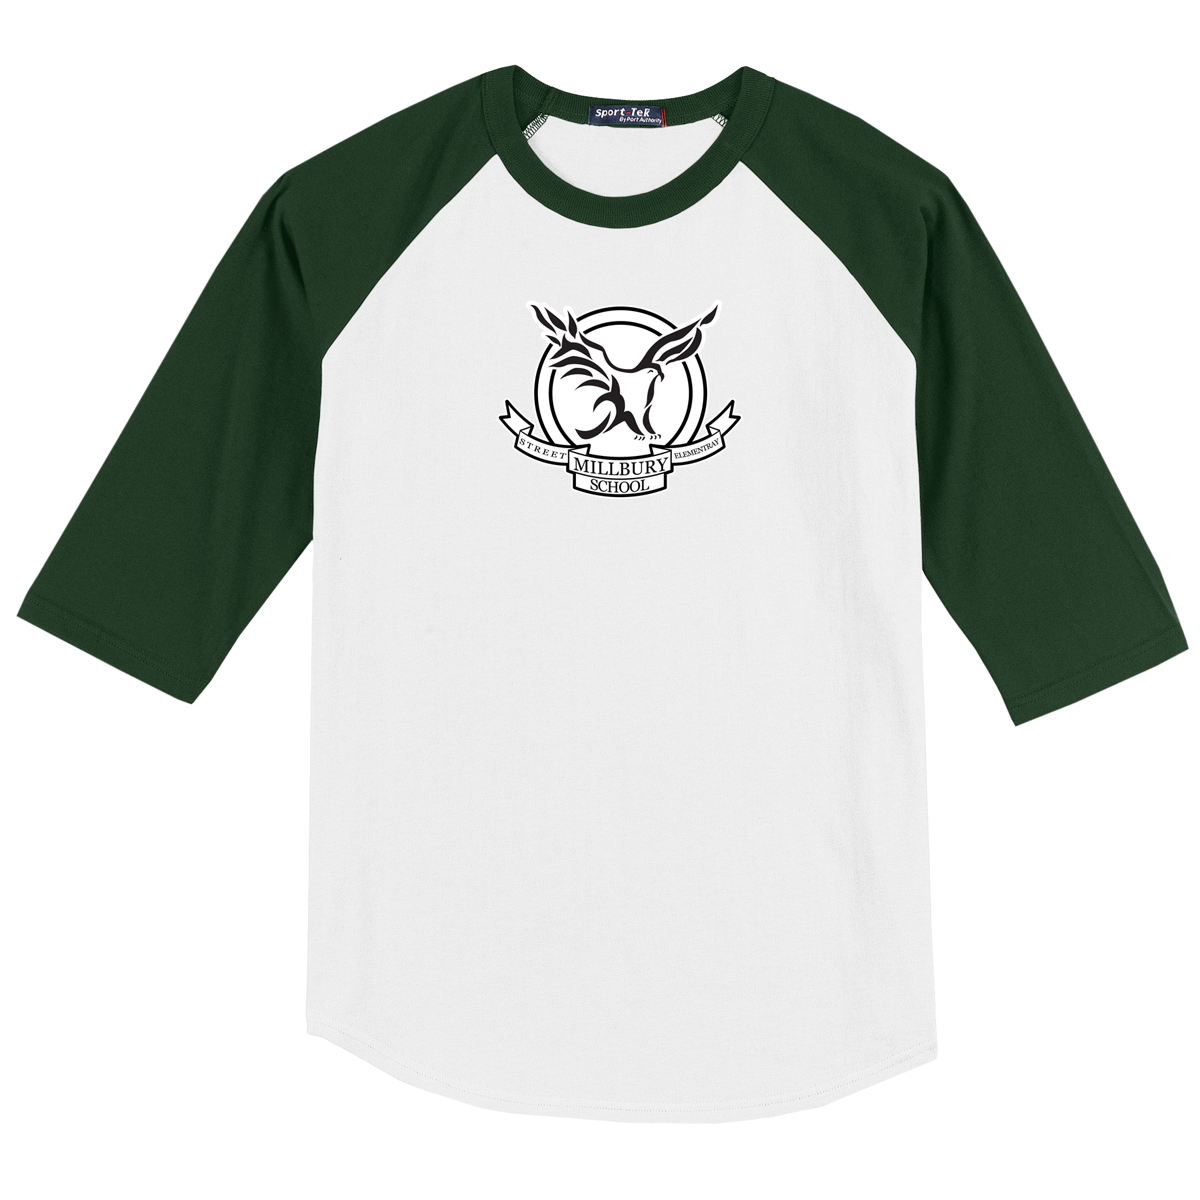 Millbury Street Elementary 3/4 Sleeve Baseball Shirt